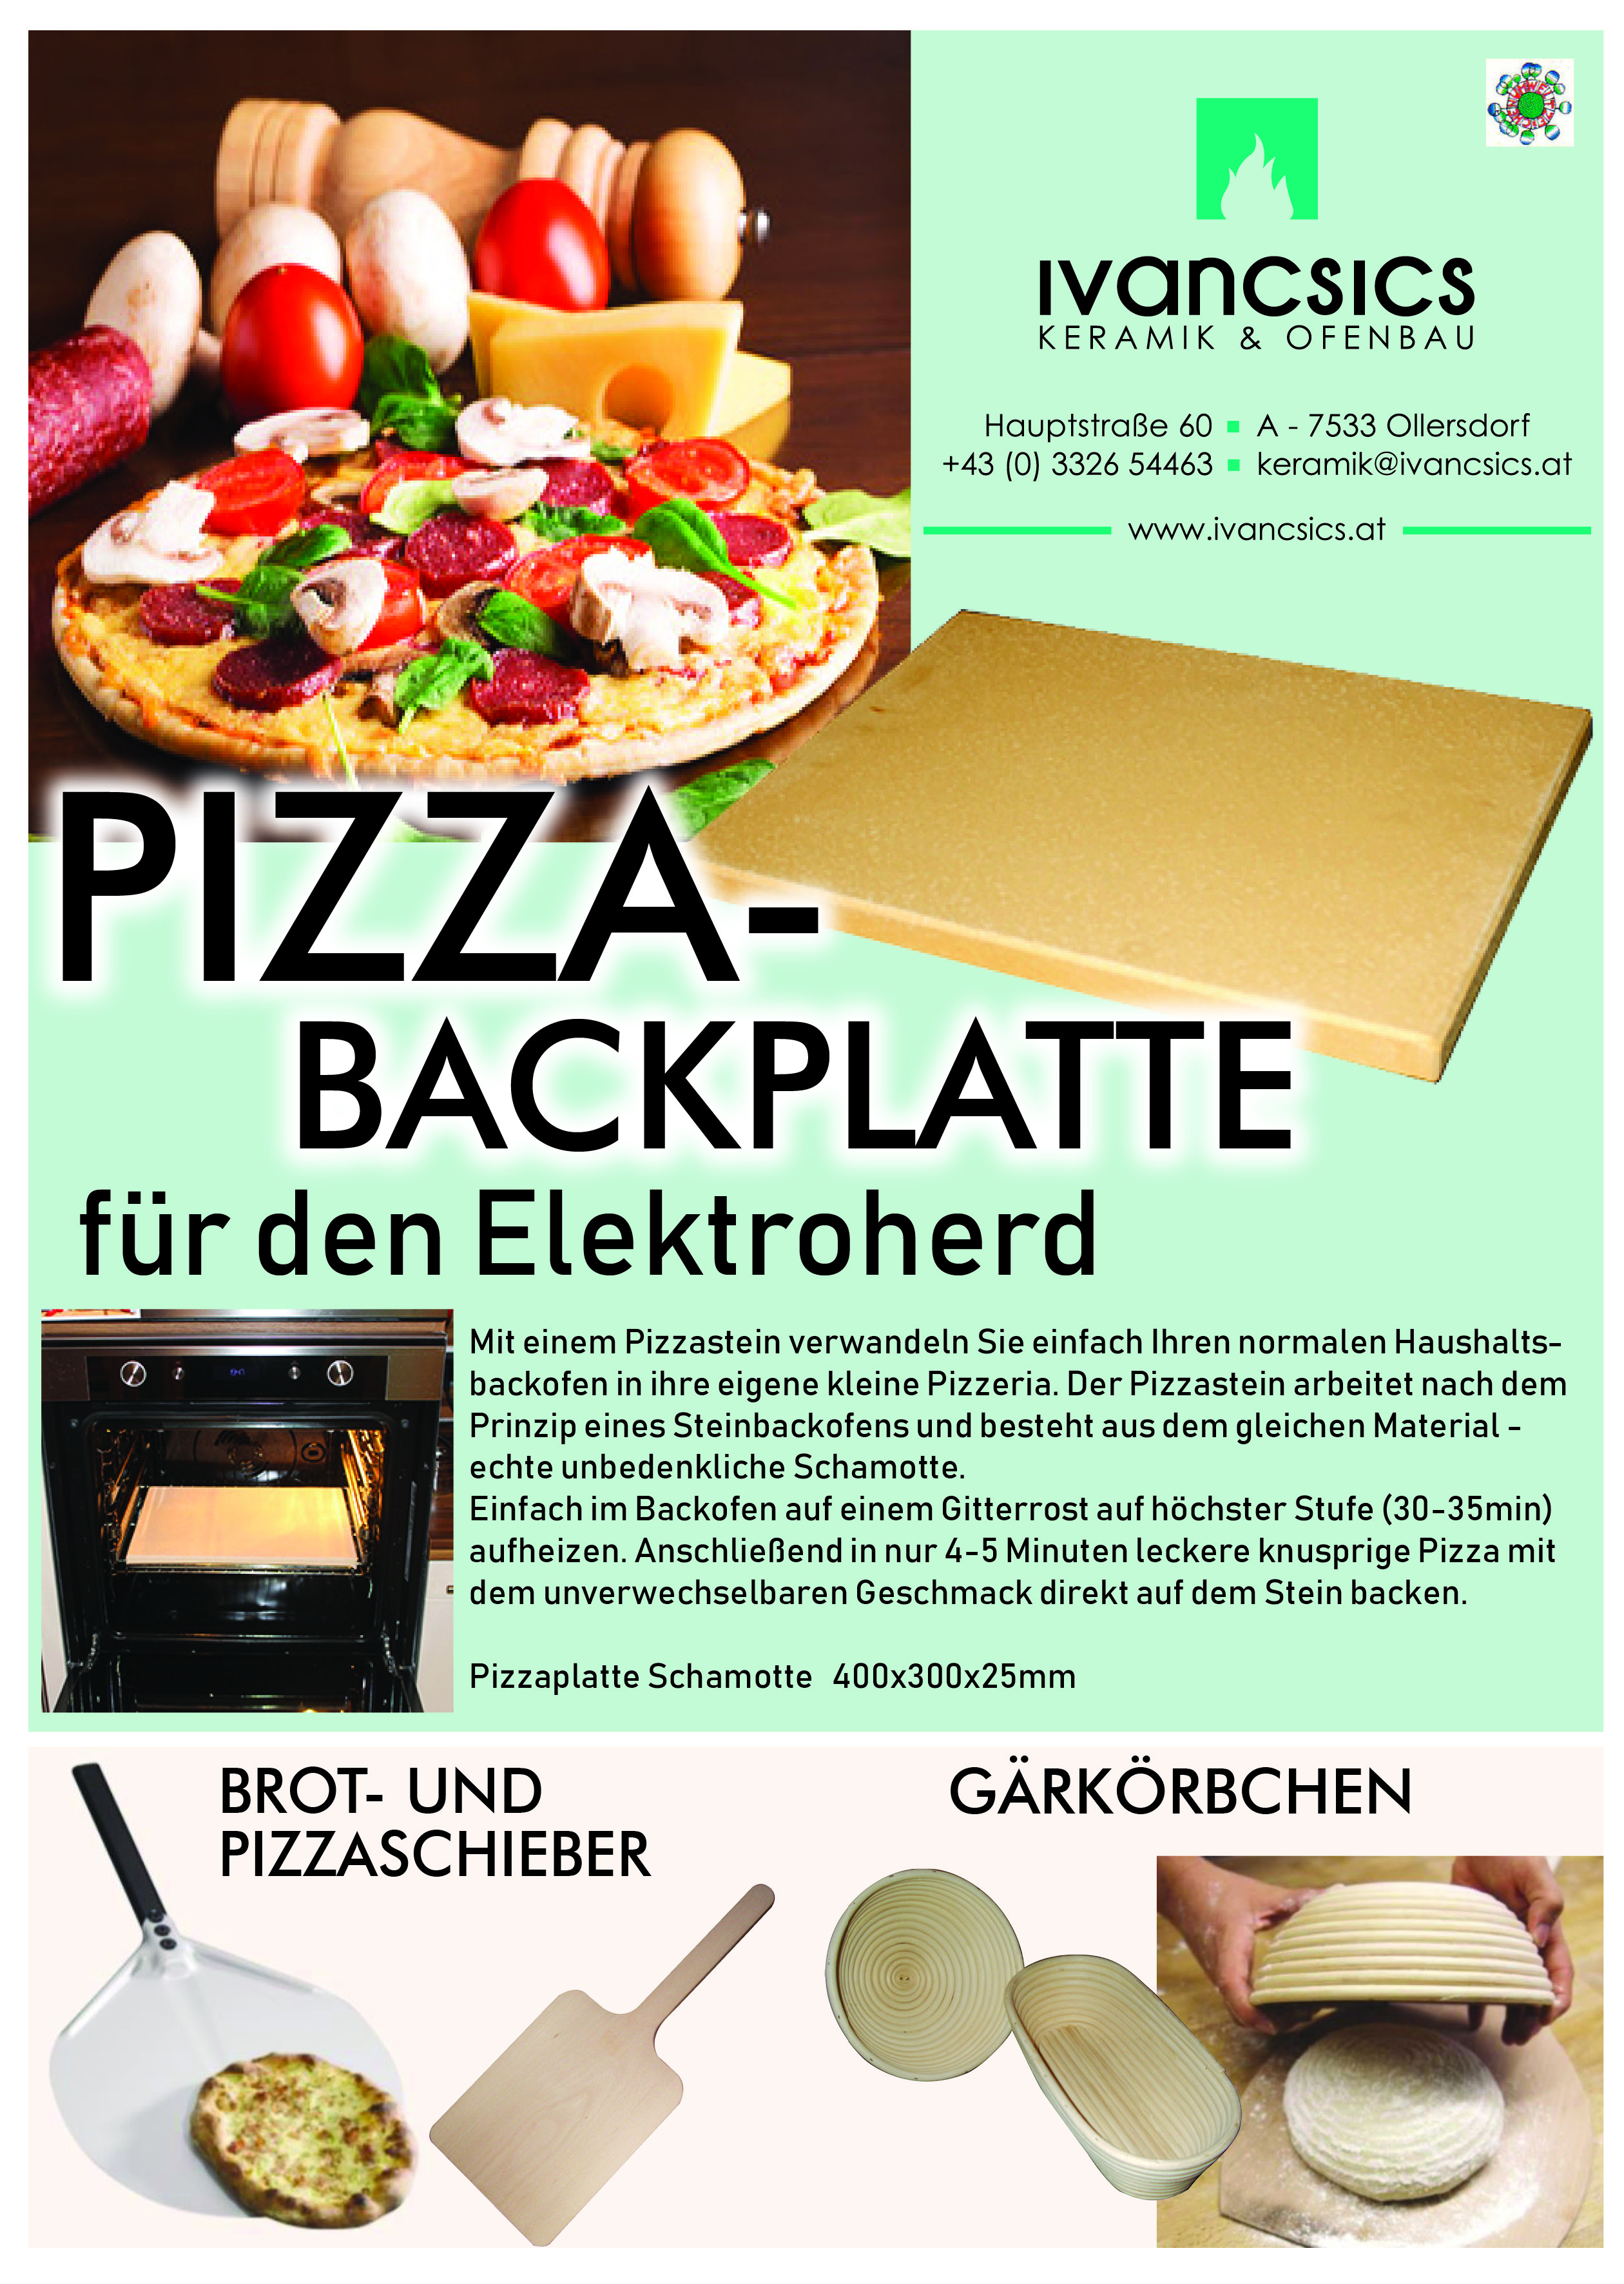 pizzastein-backplatte-brotbackstein-ivancsics-ollersdorf